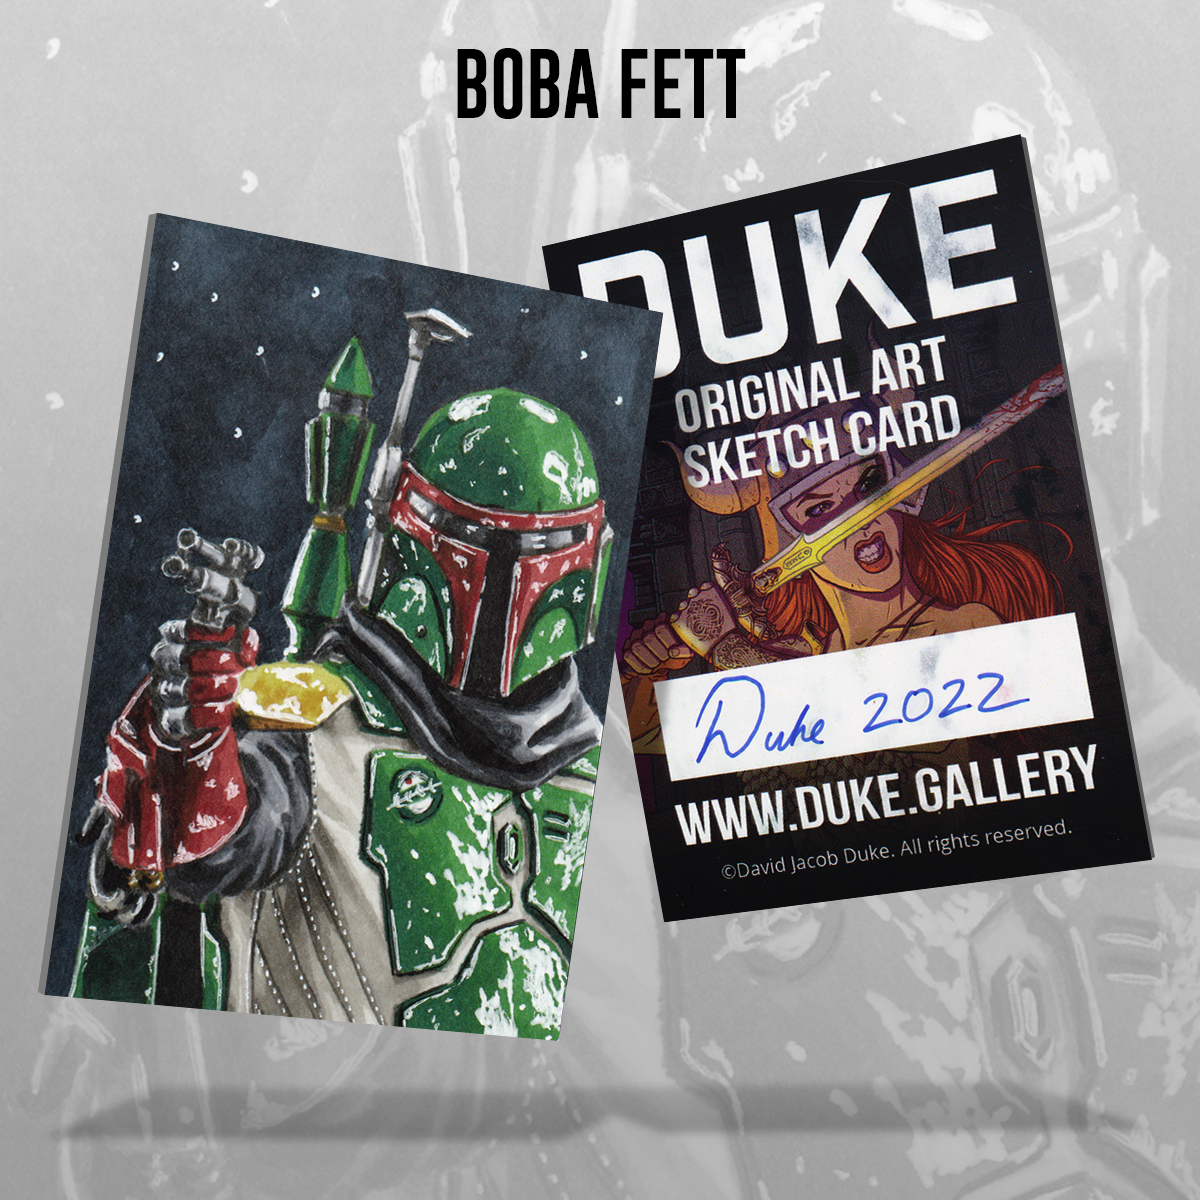 Boba Fett Sketch Card by Duke